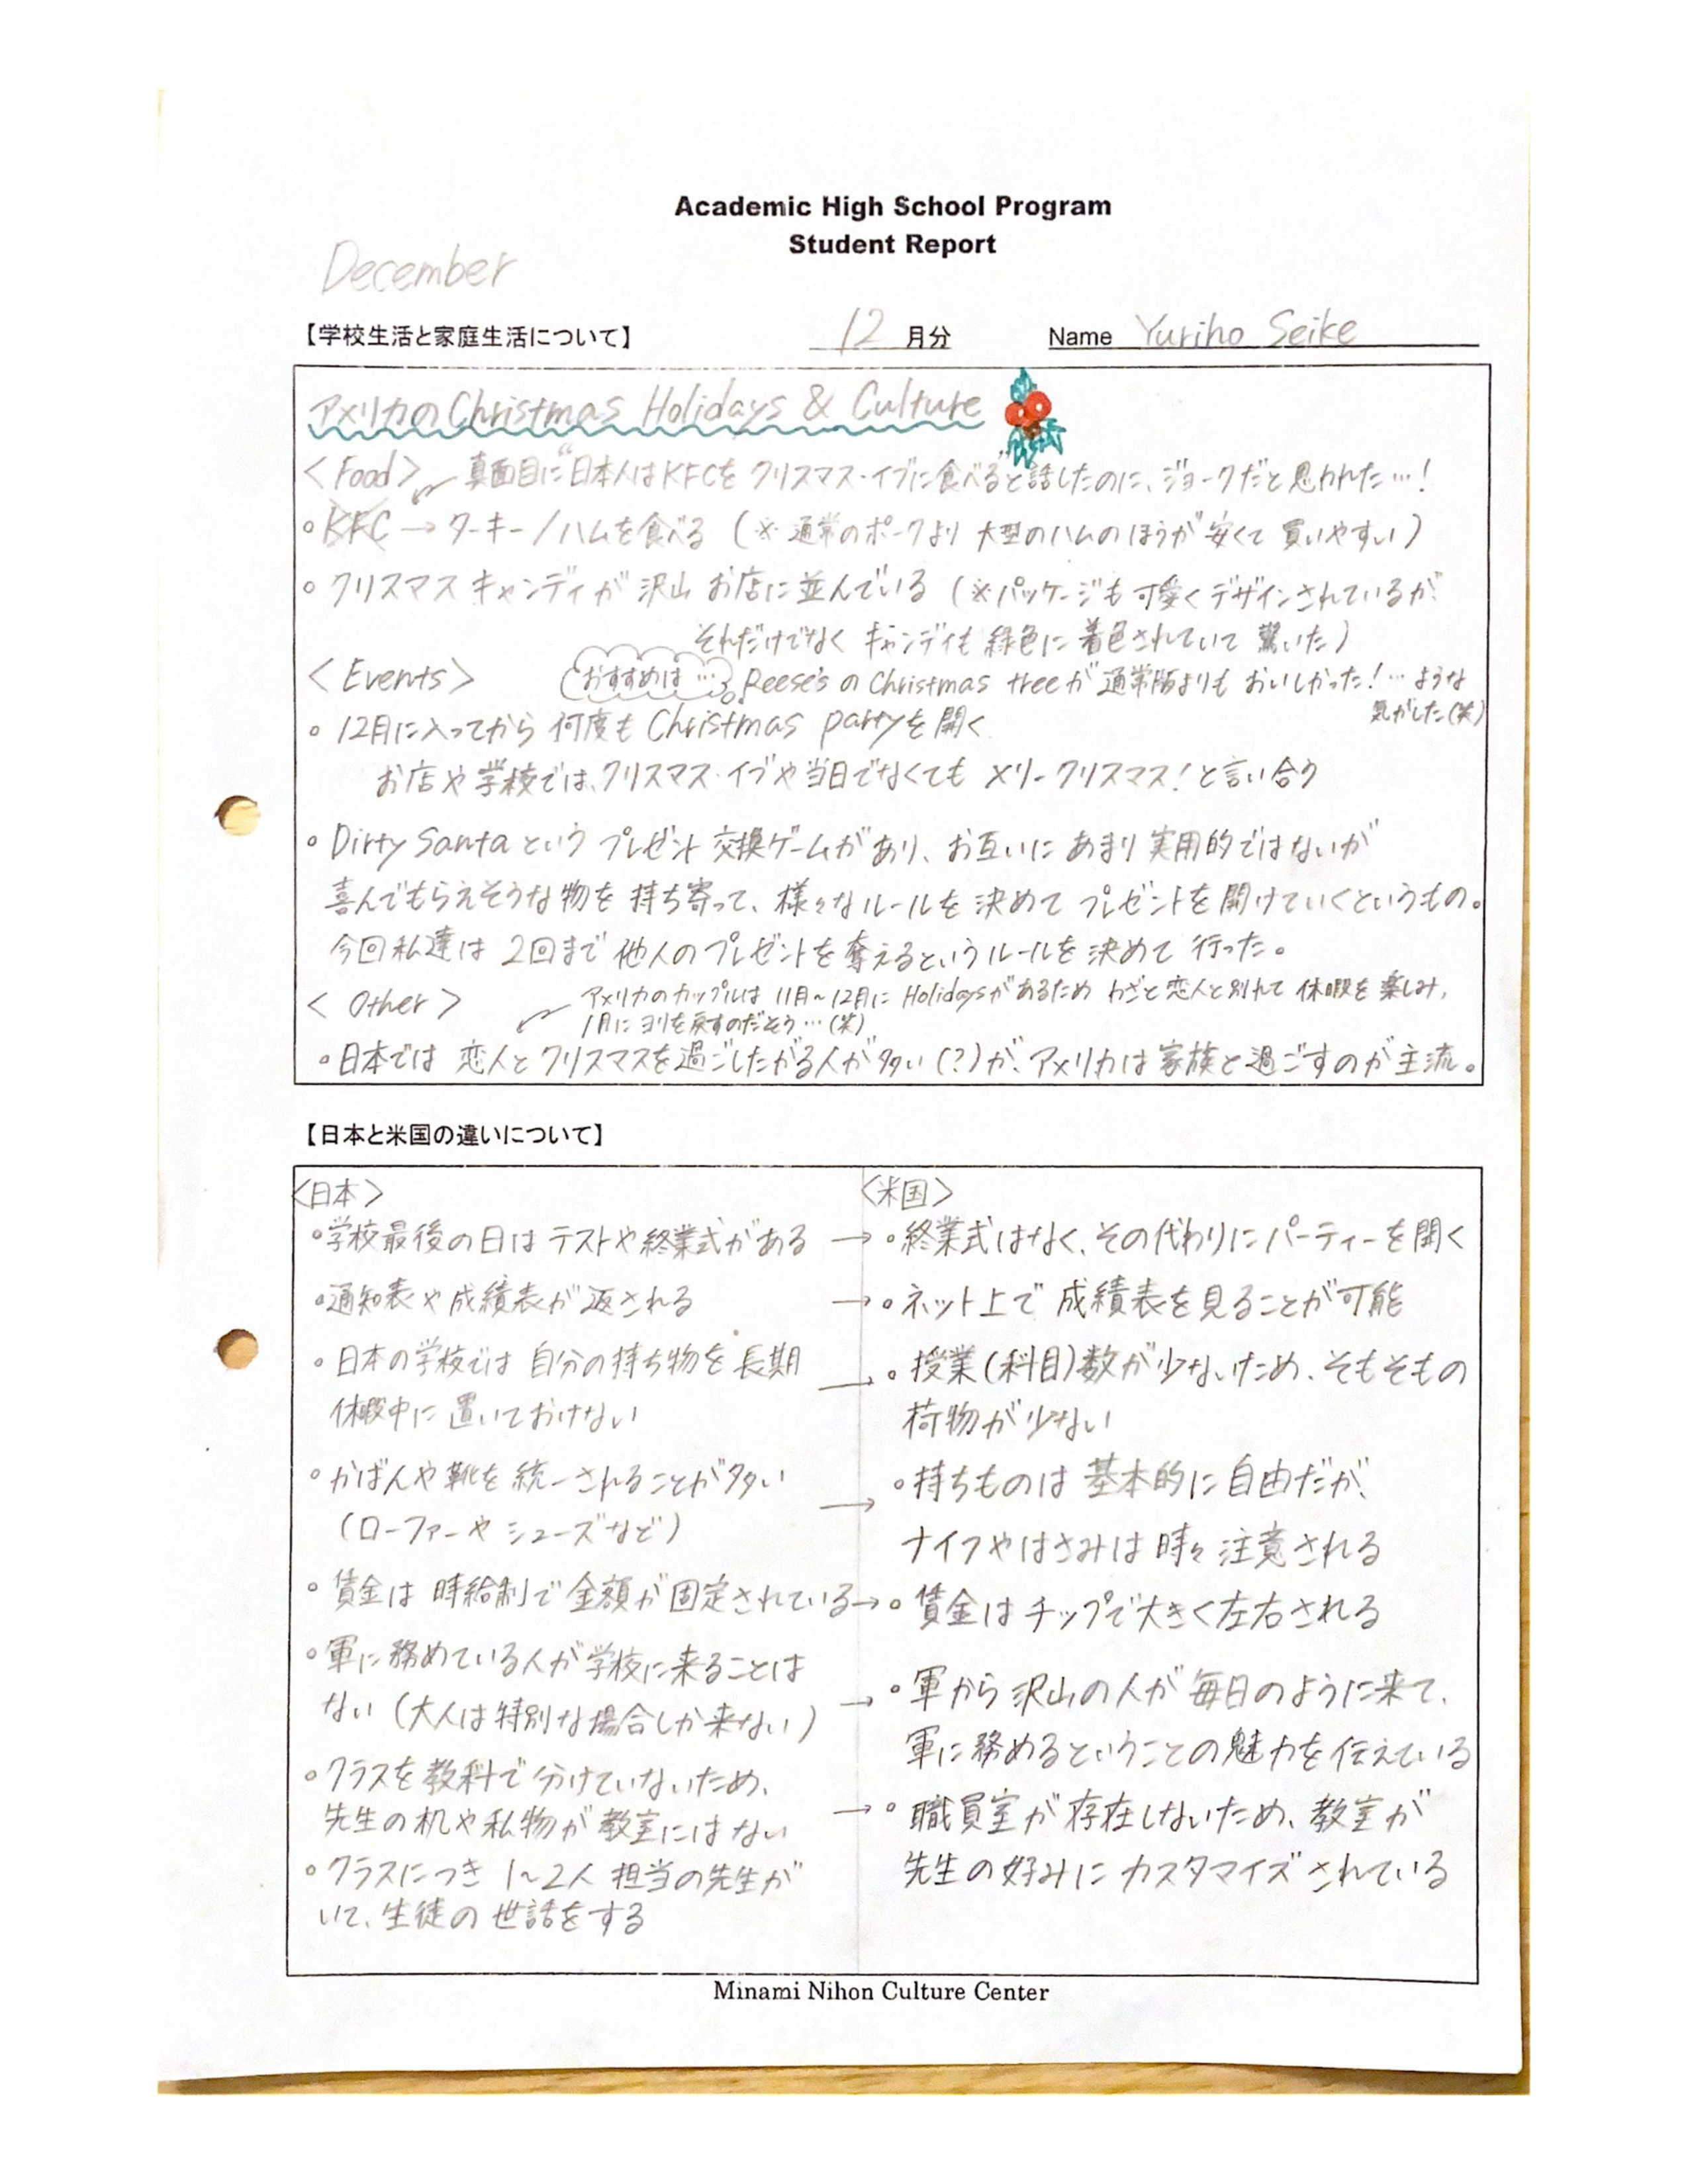 Yuriho's Student Report in December